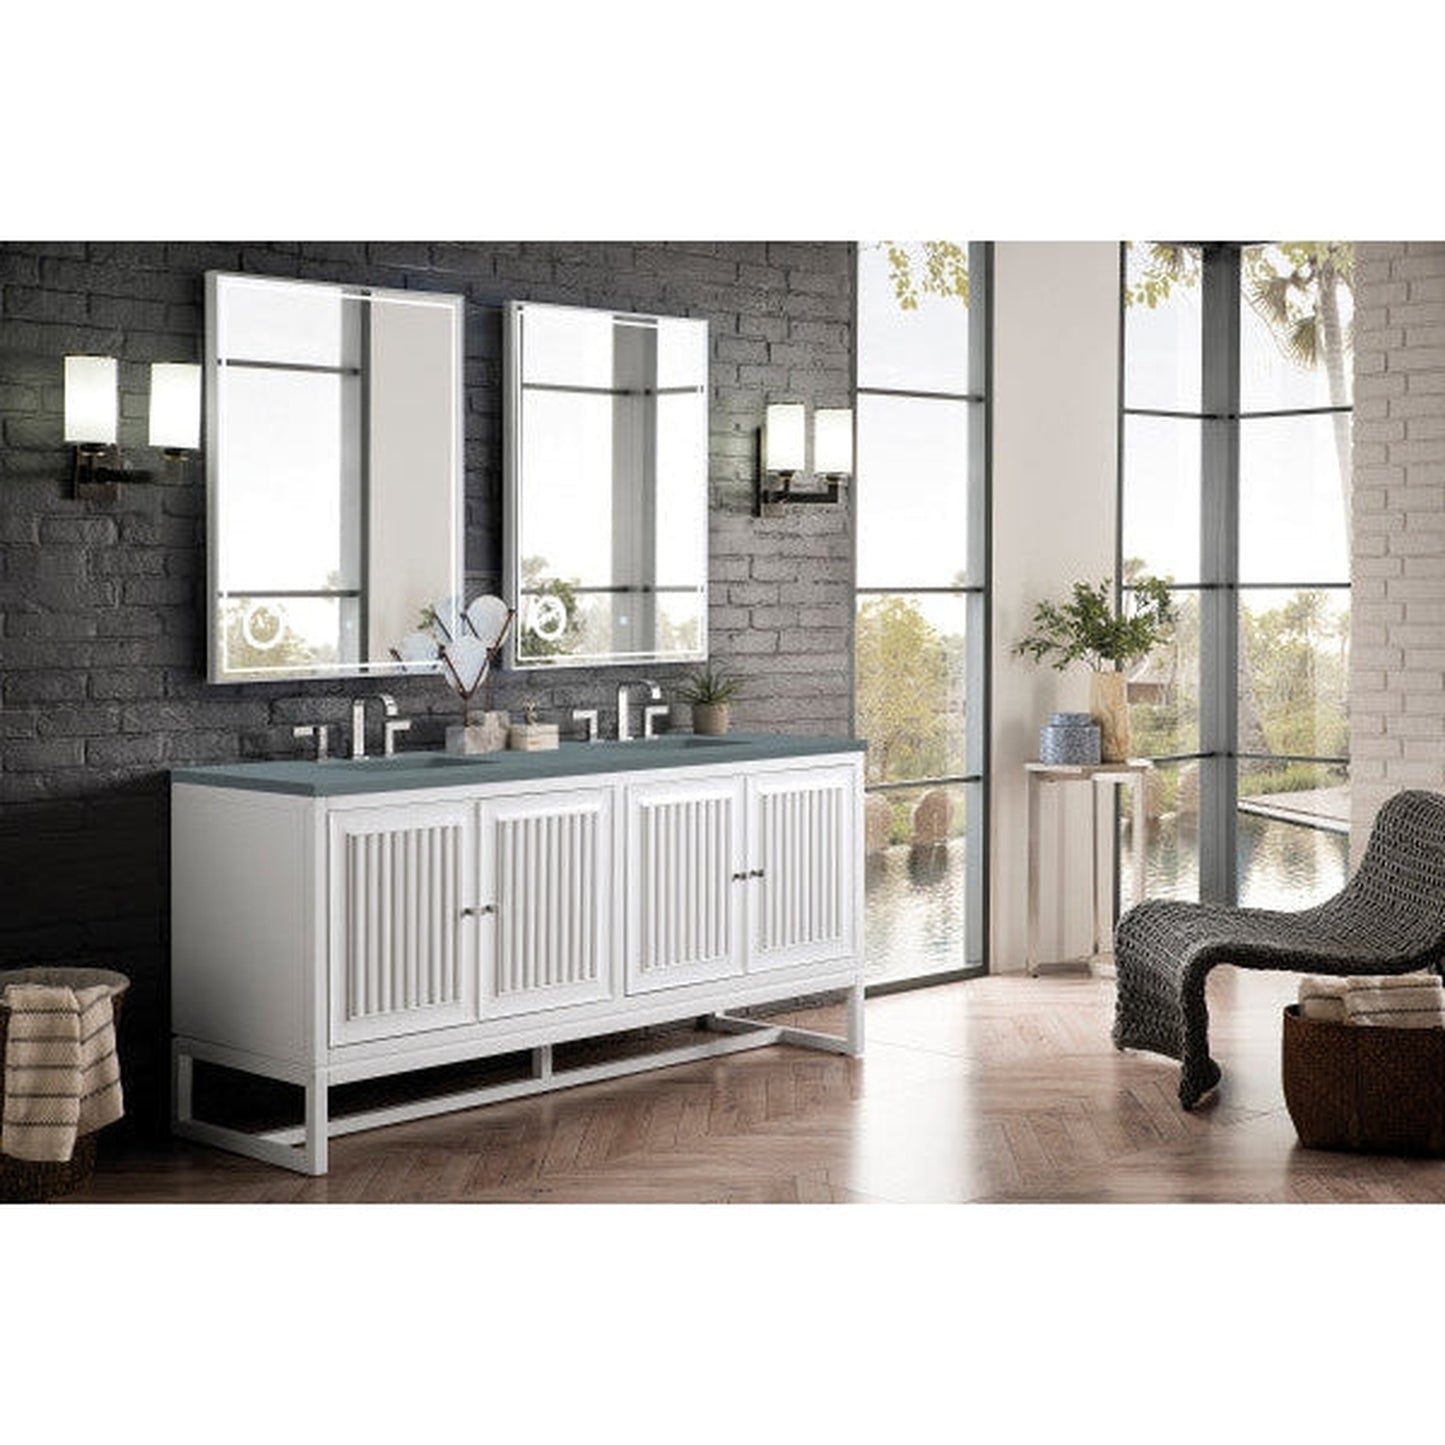 James Martin Athens 72" Double Glossy White Bathroom Vanity With 1" Cala Blue Quartz Top and Rectangular Ceramic Sink